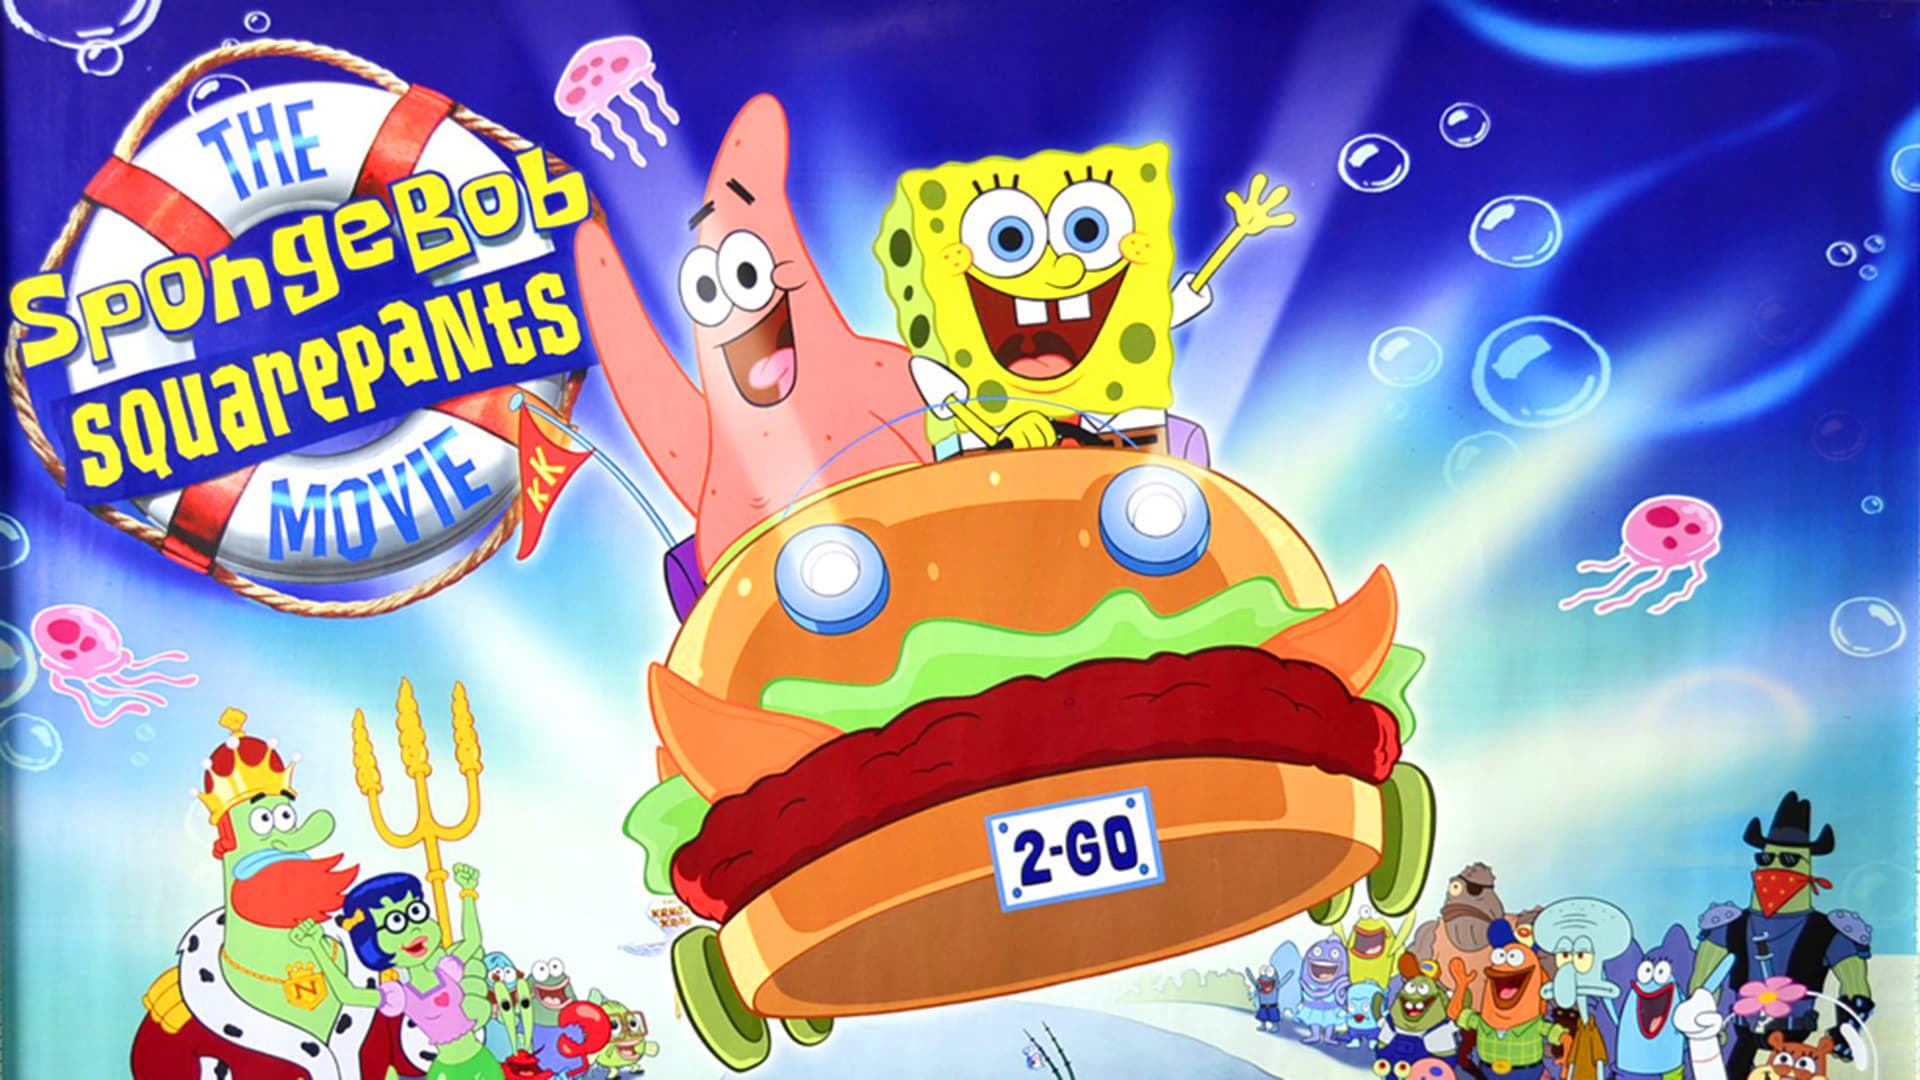 download spongebob episodes free mp4